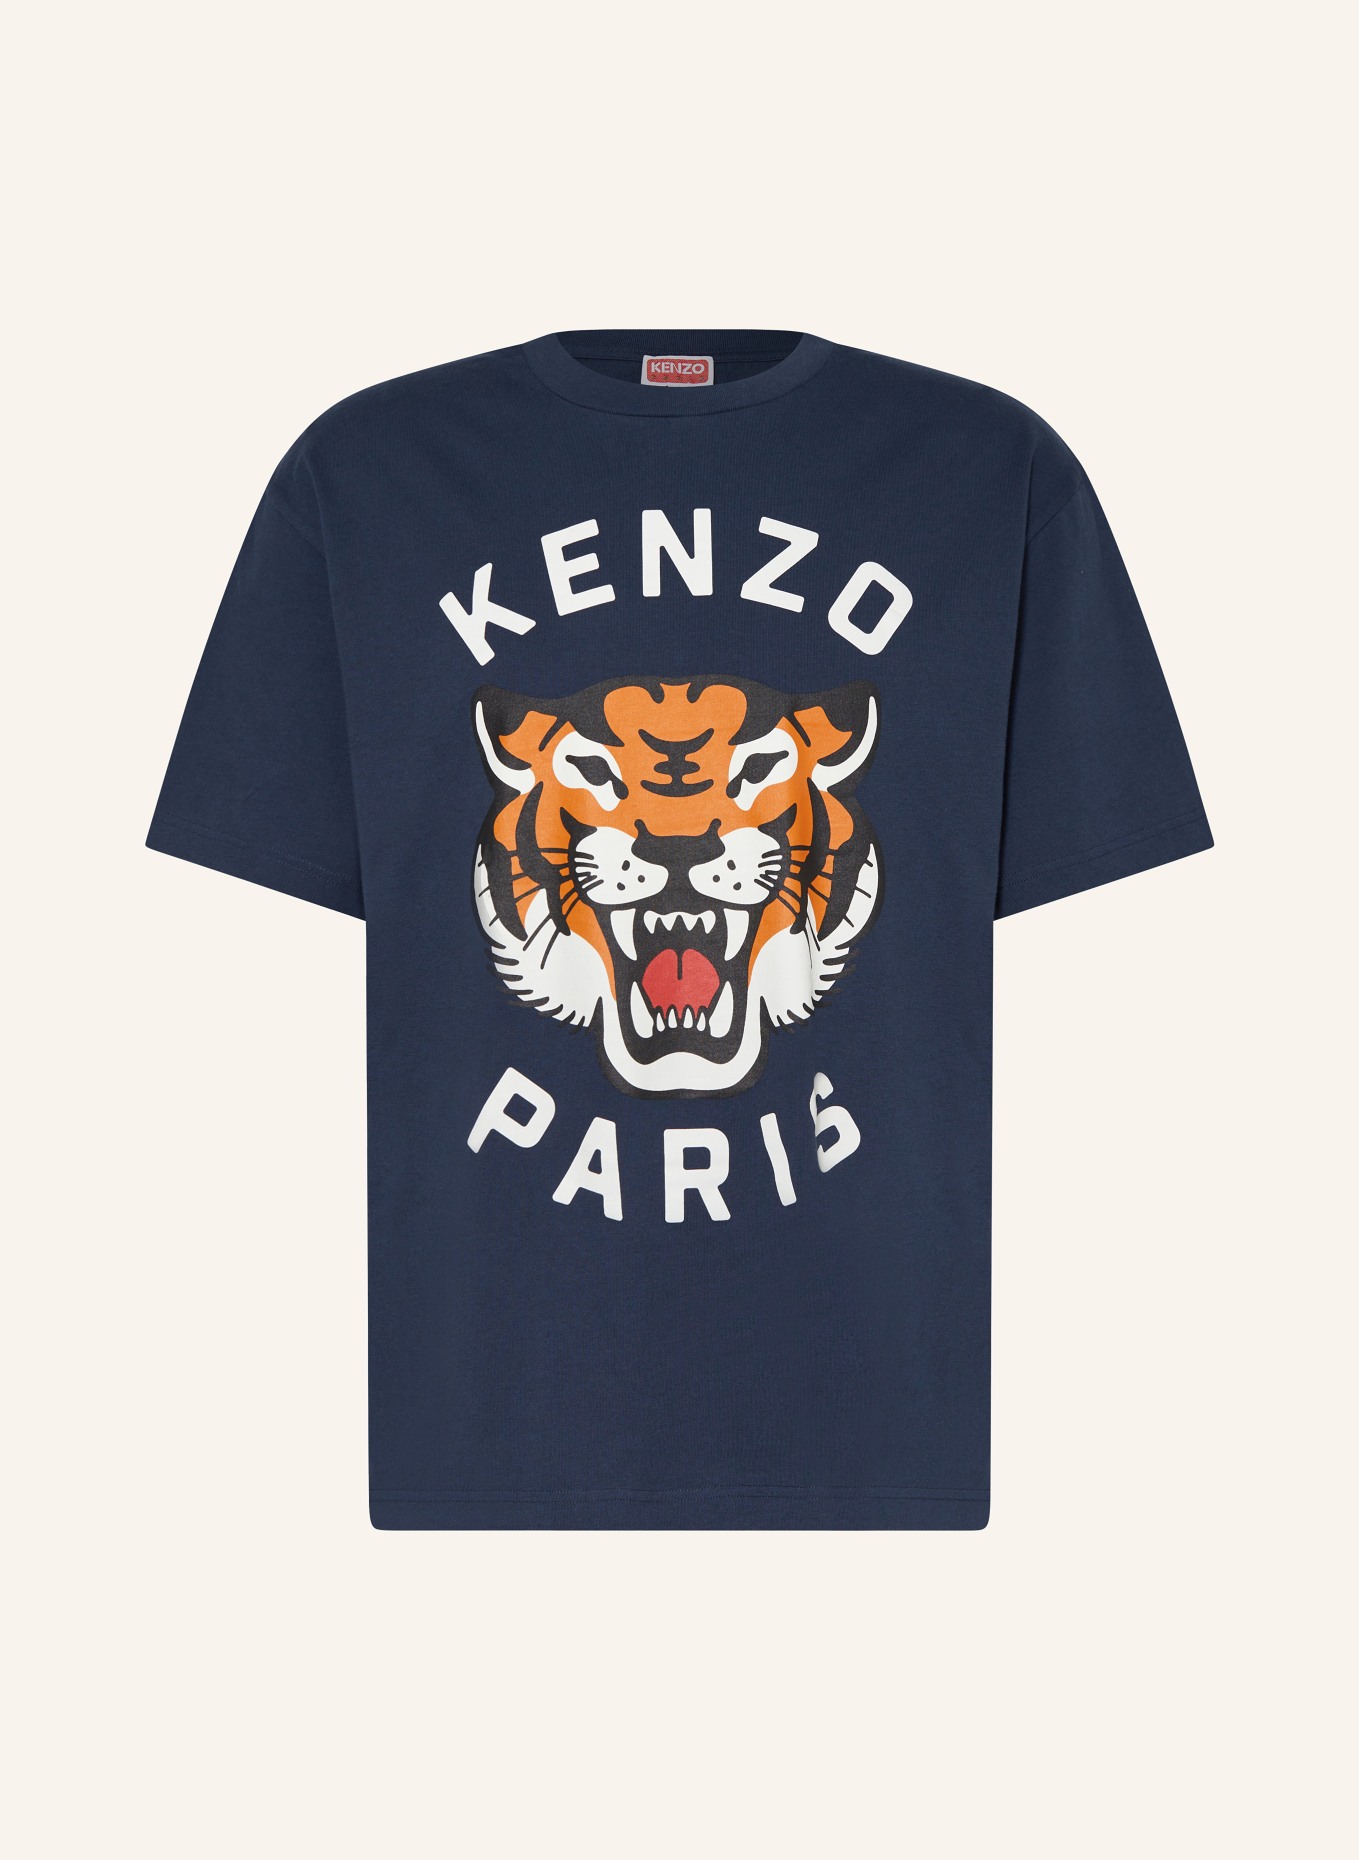 KENZO T-Shirt TIGER, Farbe: DUNKELBLAU/ WEISS/ ORANGE (Bild 1)